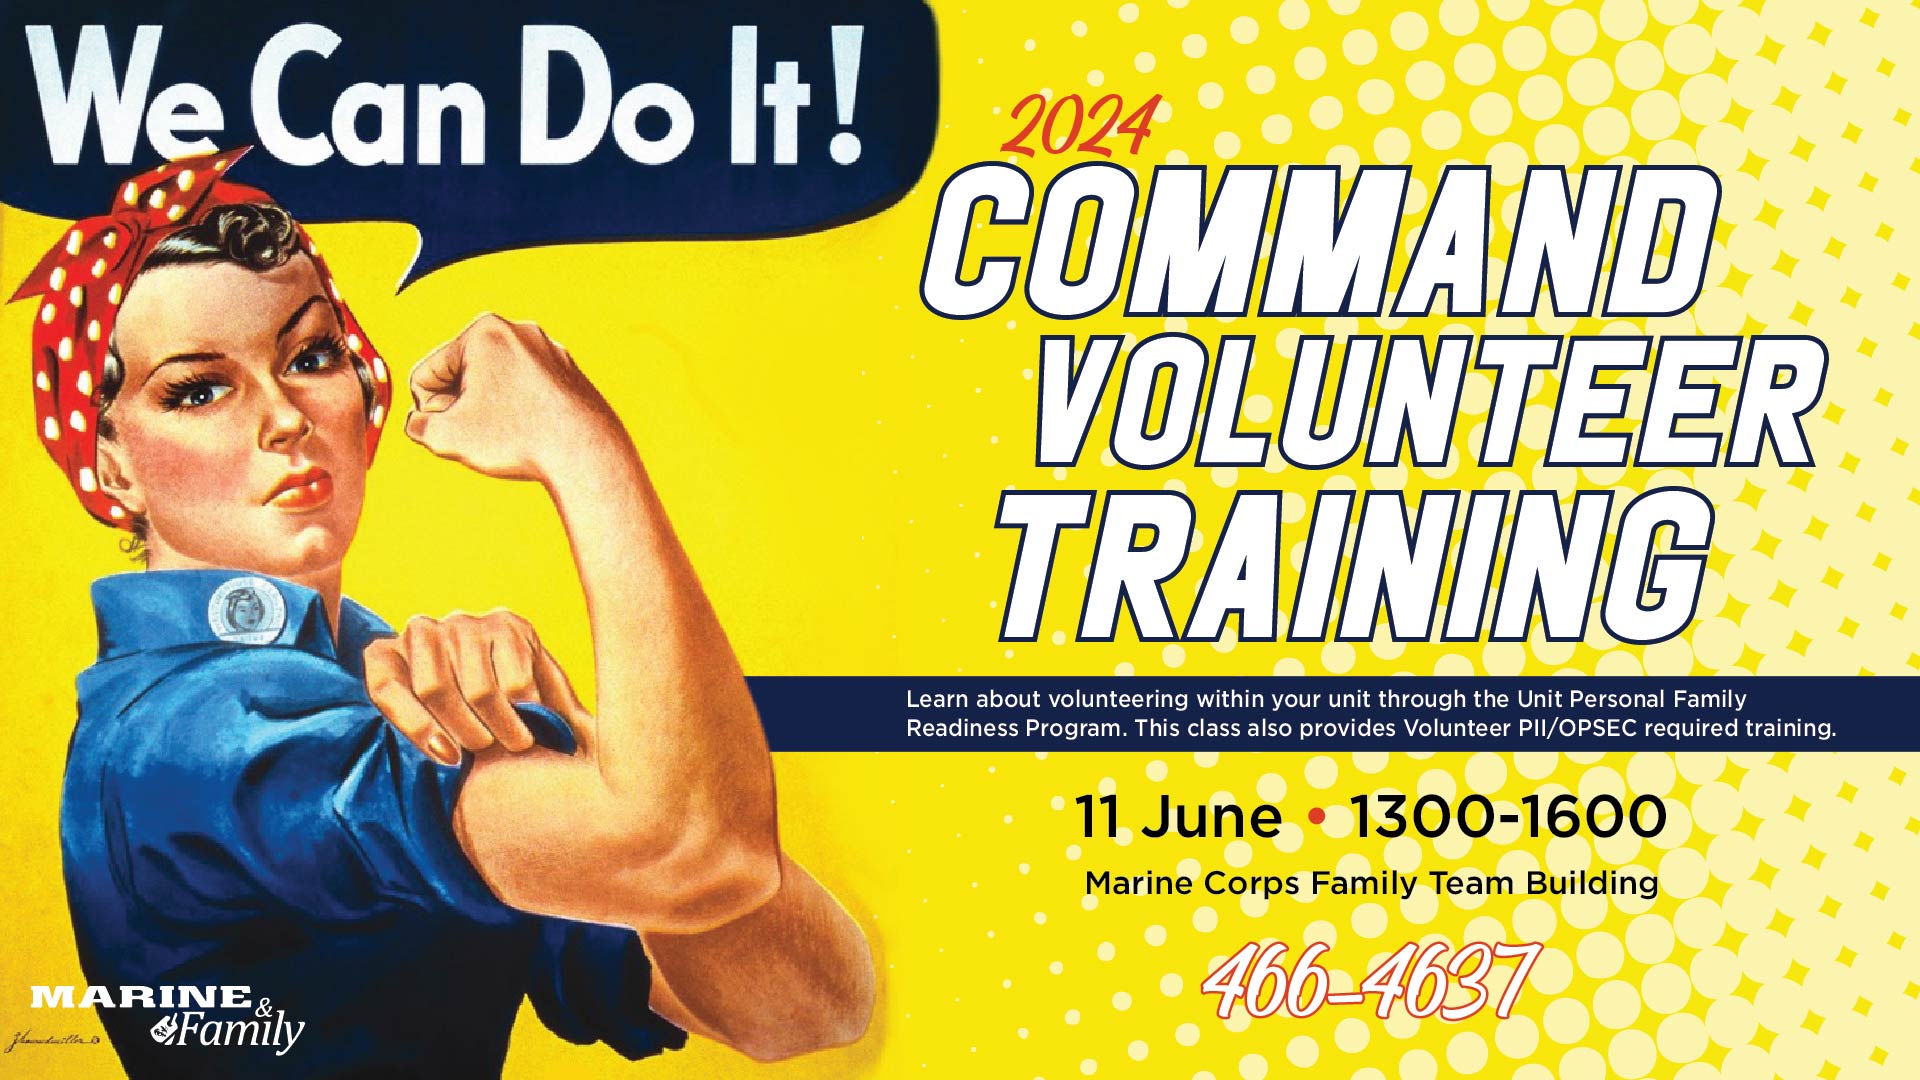 Command Volunteer Training